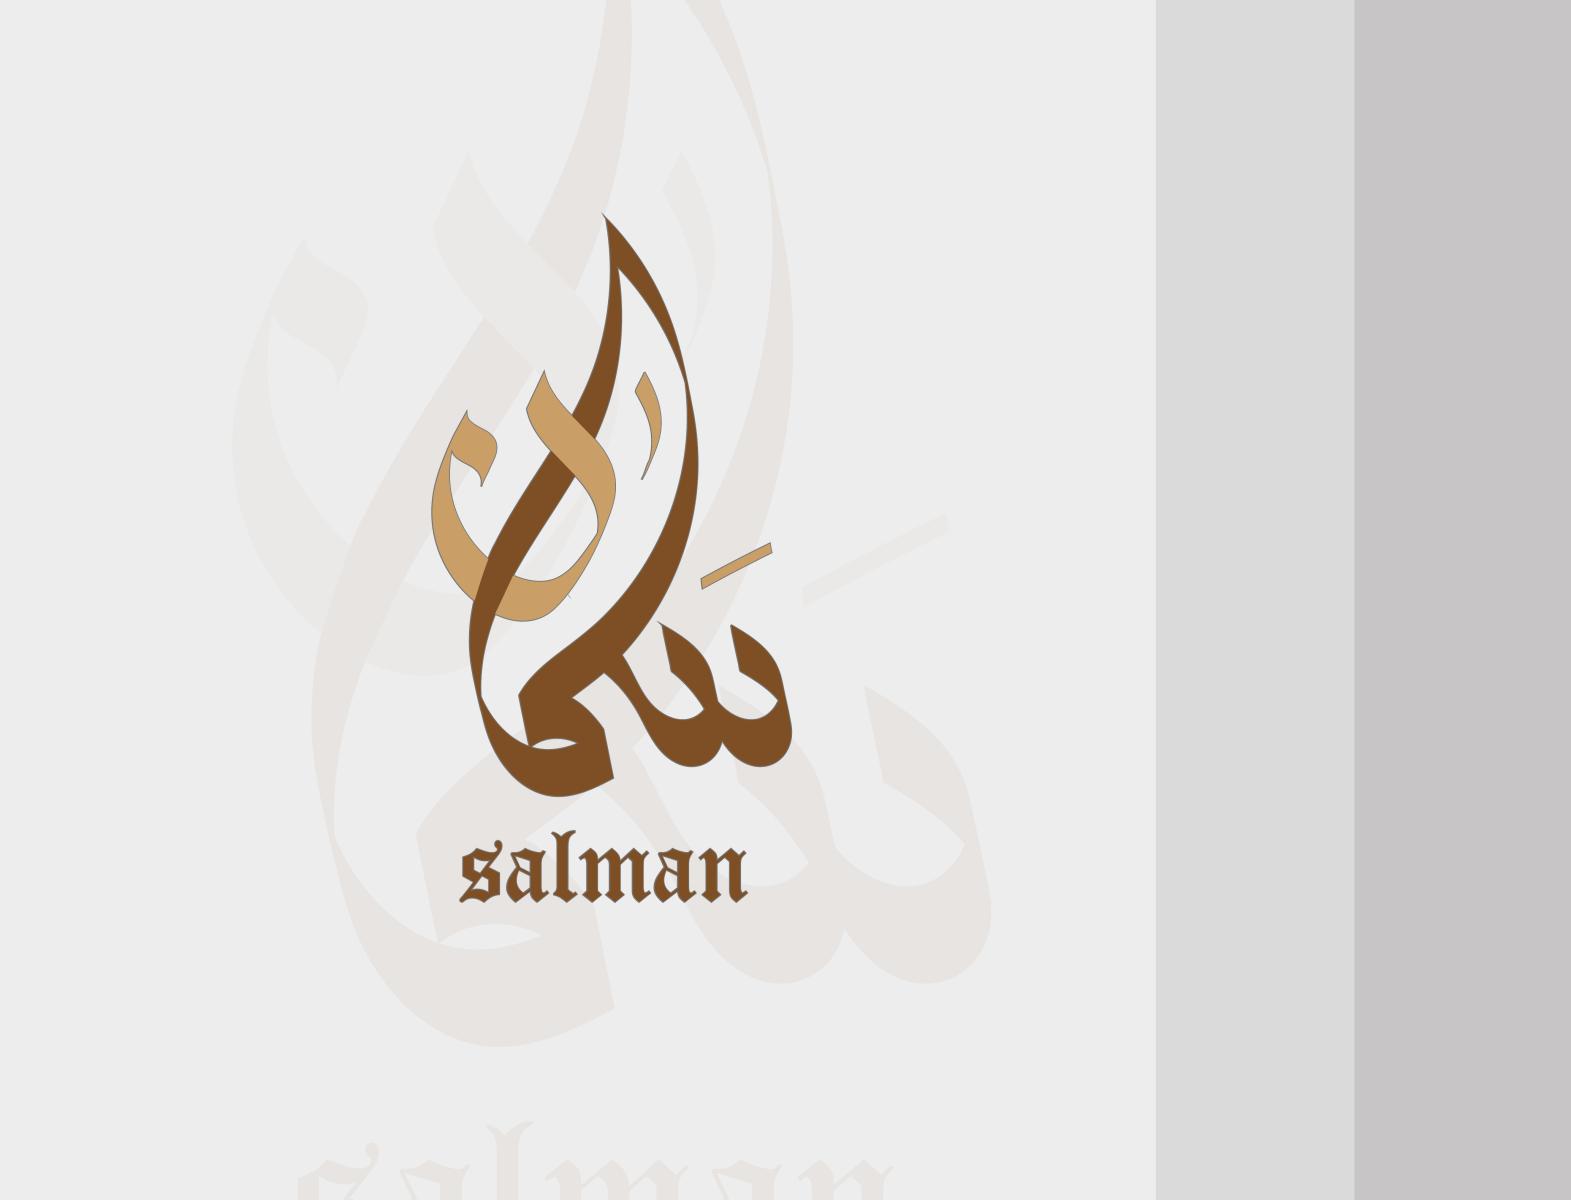 New logo for salman cafe&patisserie | Logo design contest | 99designs